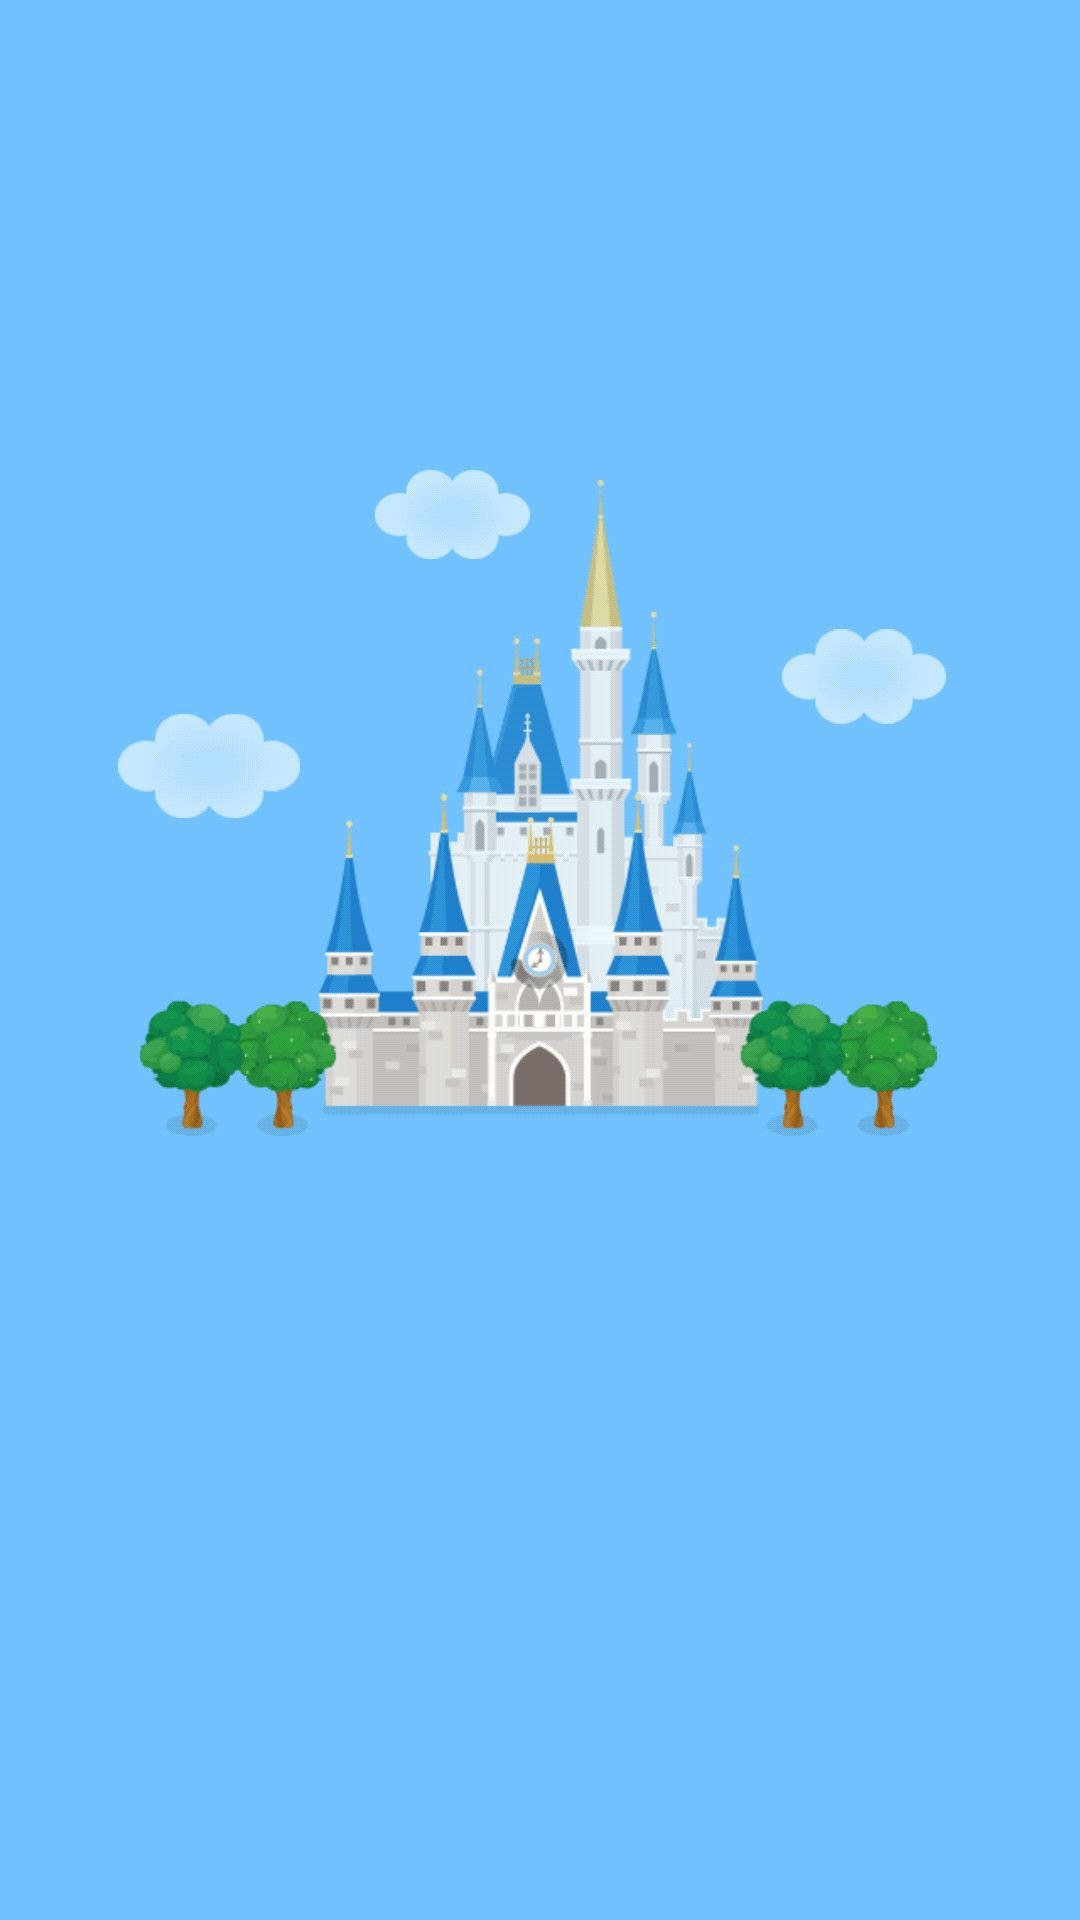 Disney Channel Minimalist Castle Illustration Wallpaper